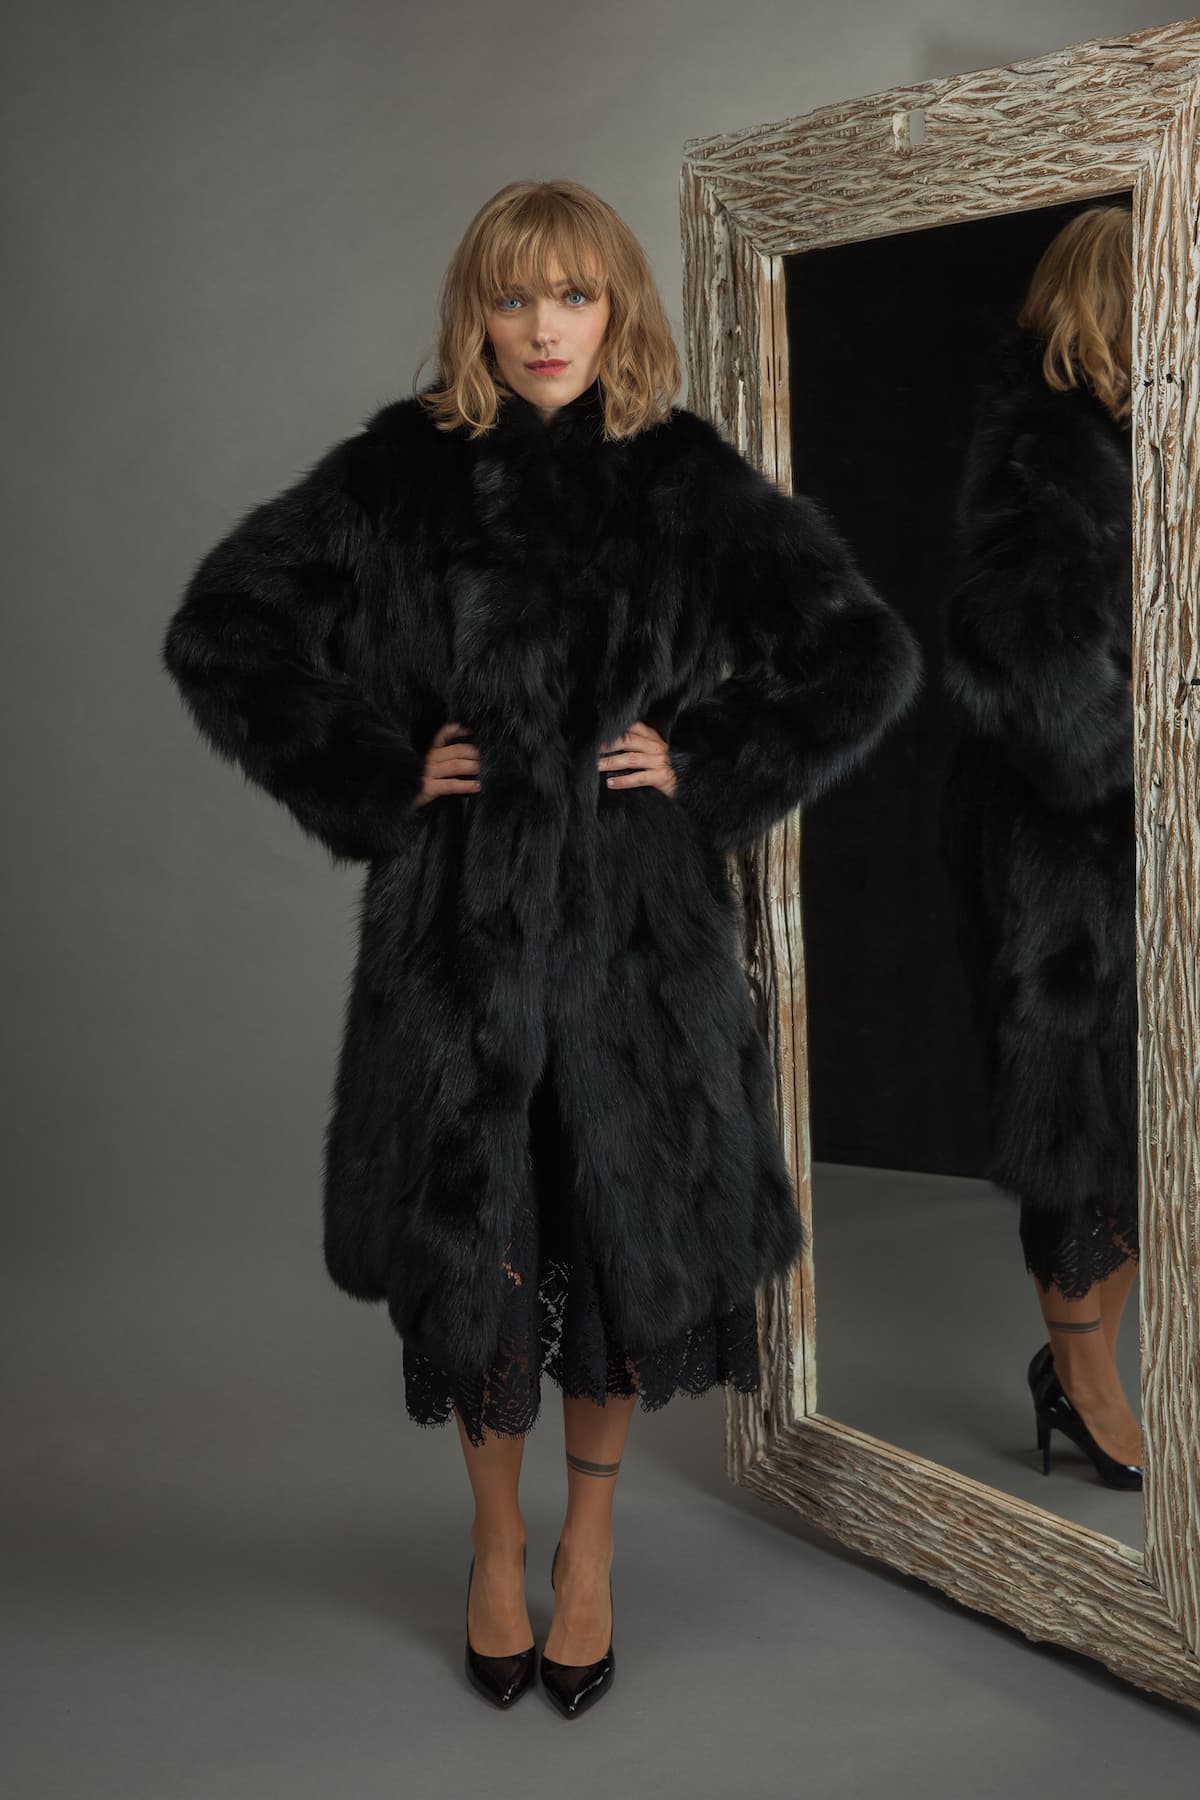 2in1 Long Black Fox Fur Coat-Vest with Detachable Sleeves | Handmade